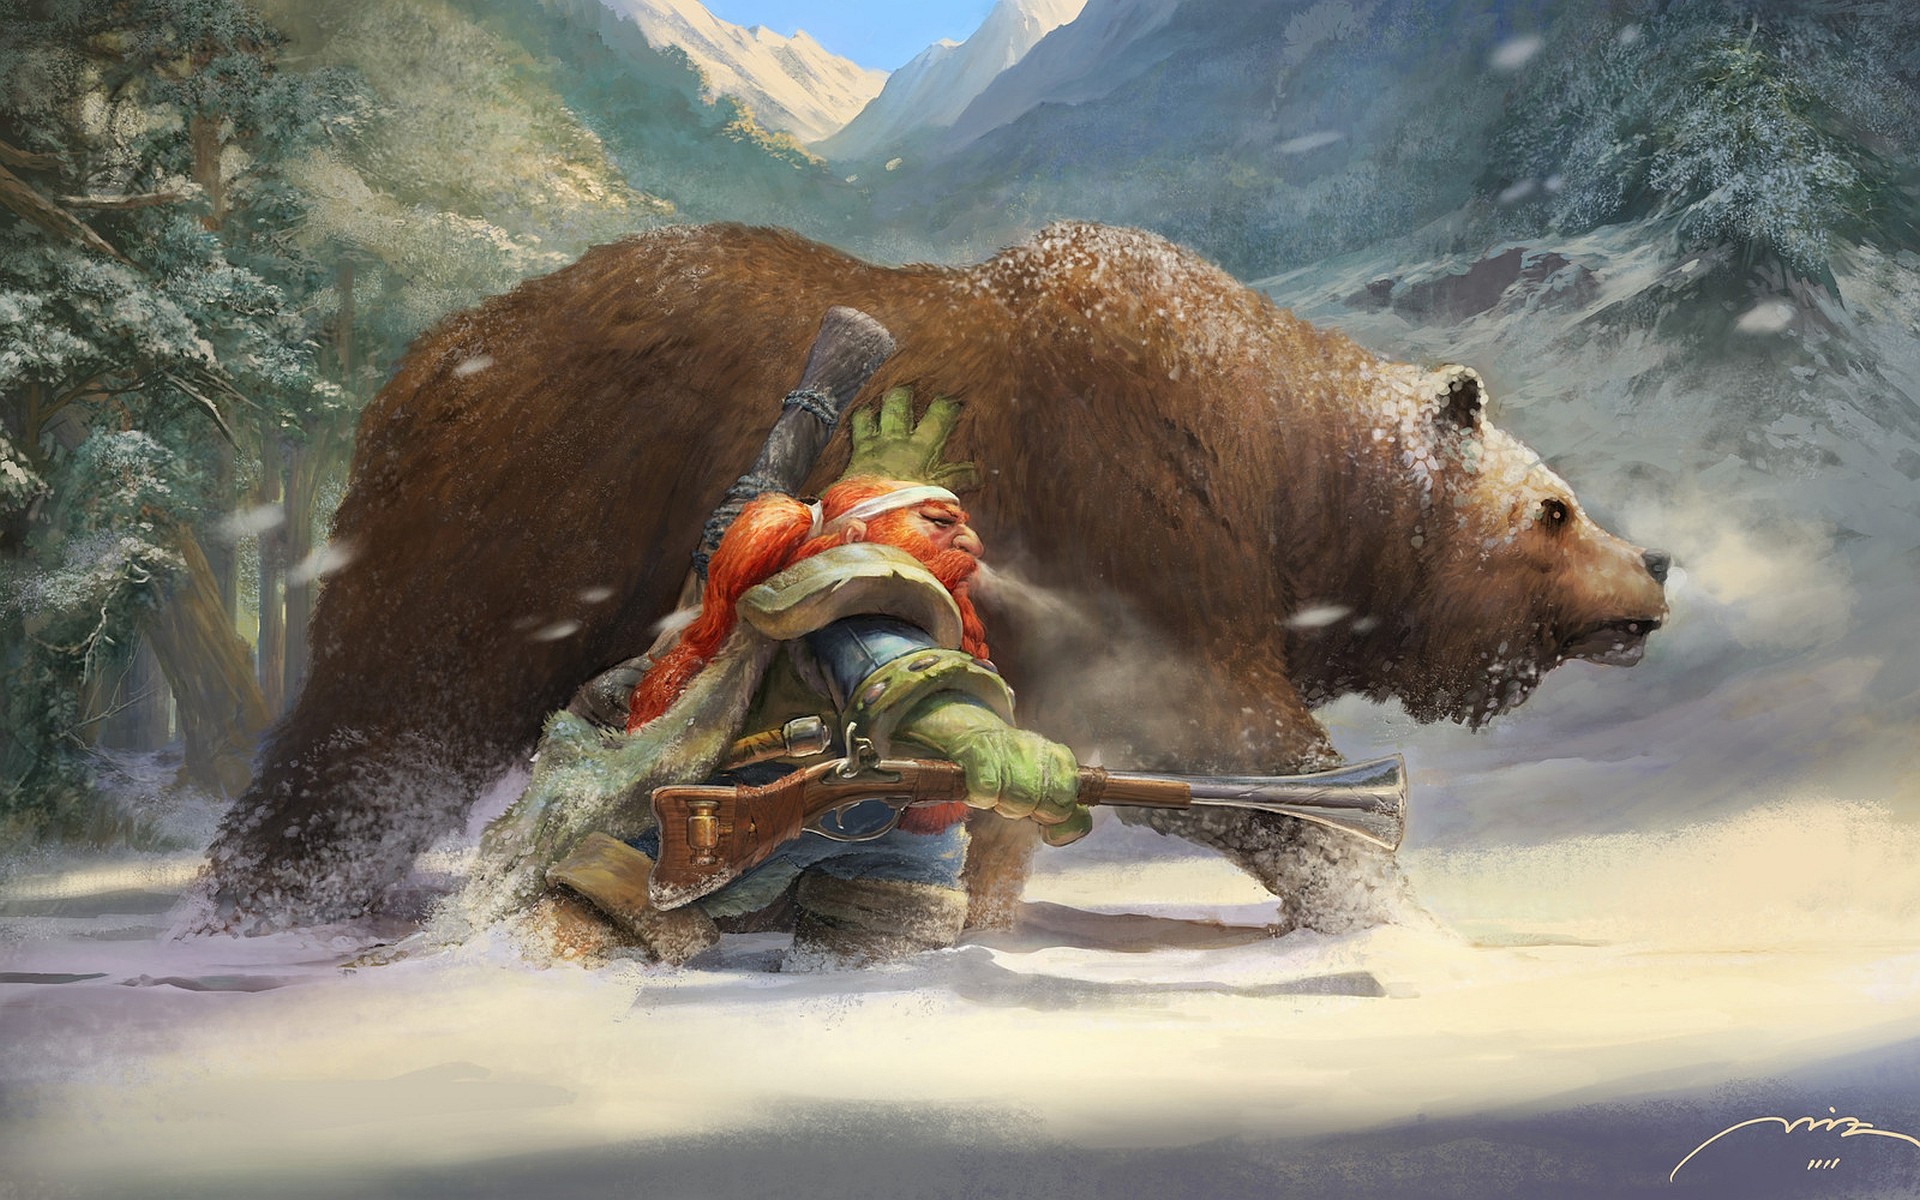 General 1920x1200 World of Warcraft dwarf hunter redhead brown bear PC gaming video game art fantasy art bears animals snow rifles mammals digital art watermarked